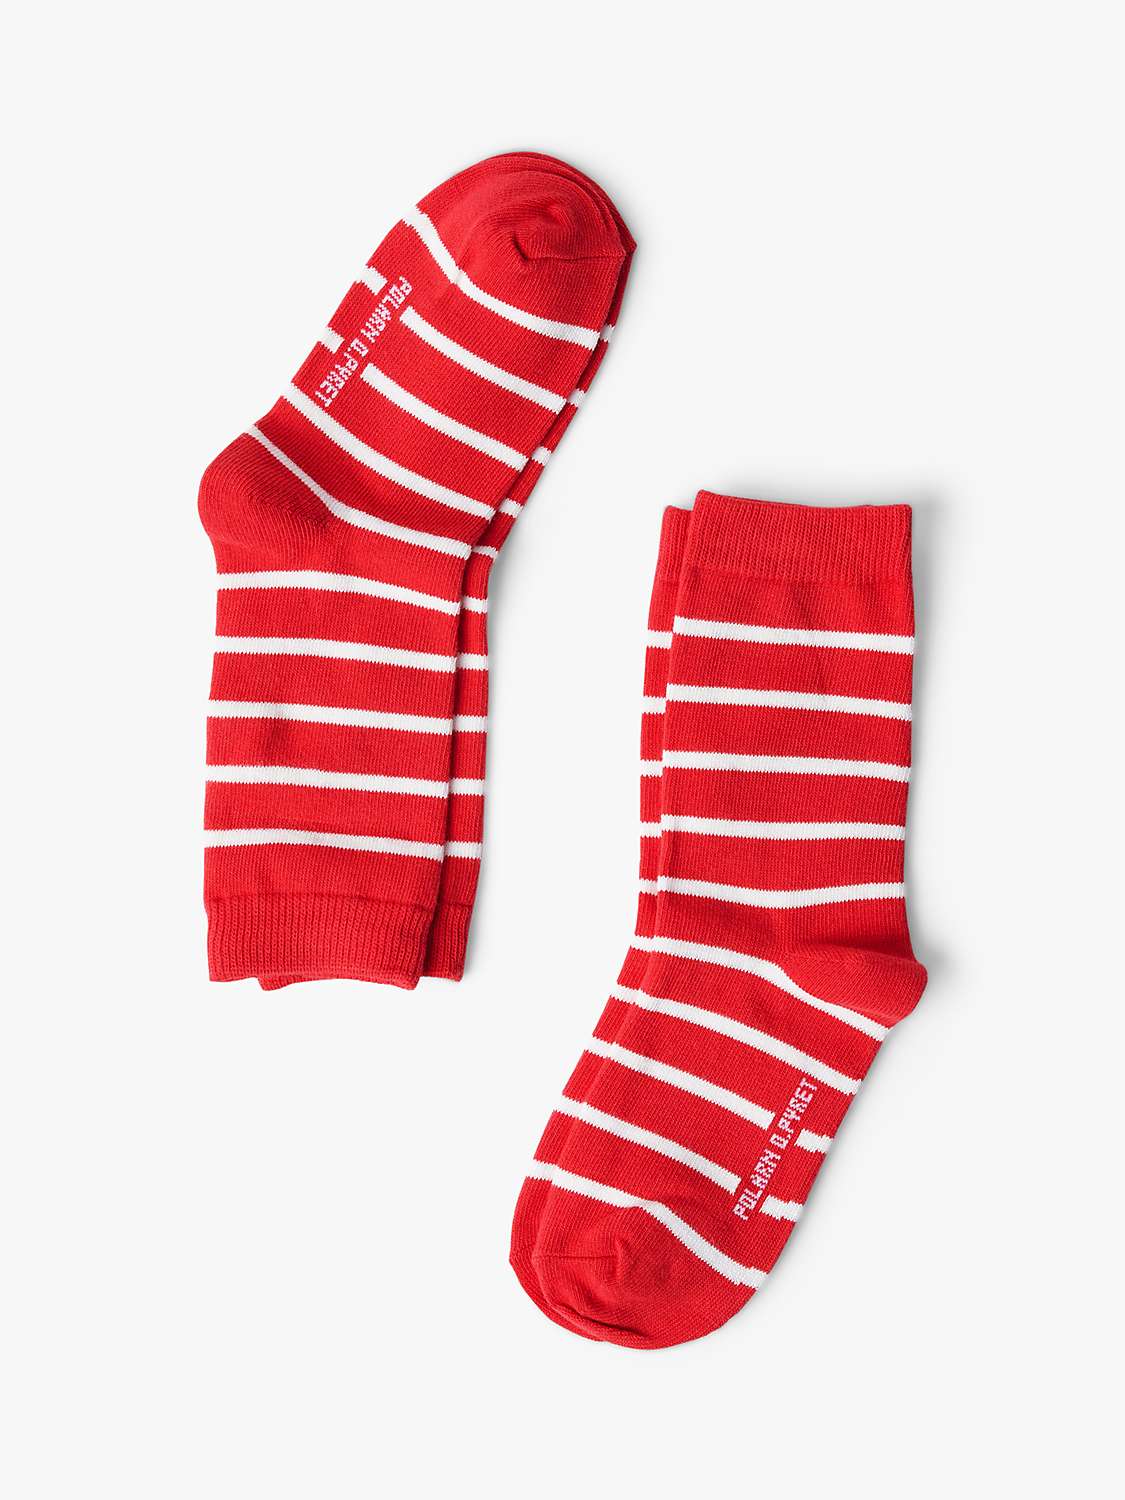 Buy Polarn O. Pyret Kids' Stripe Socks, Pack of 2, Red Online at johnlewis.com